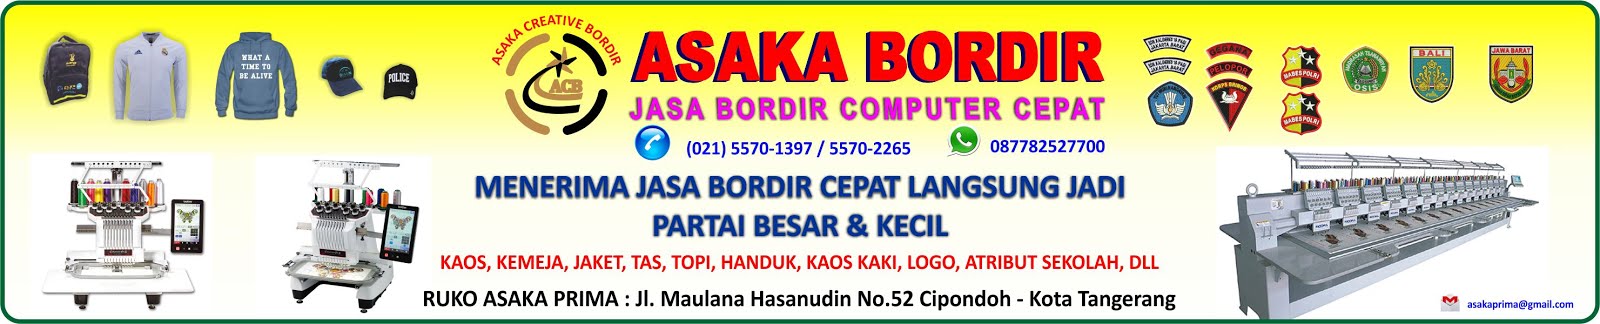 BORDIR KOMPUTER - Asaka Bordir Komputer - Logo Bordir Komputer Harga Grosir dan murah.